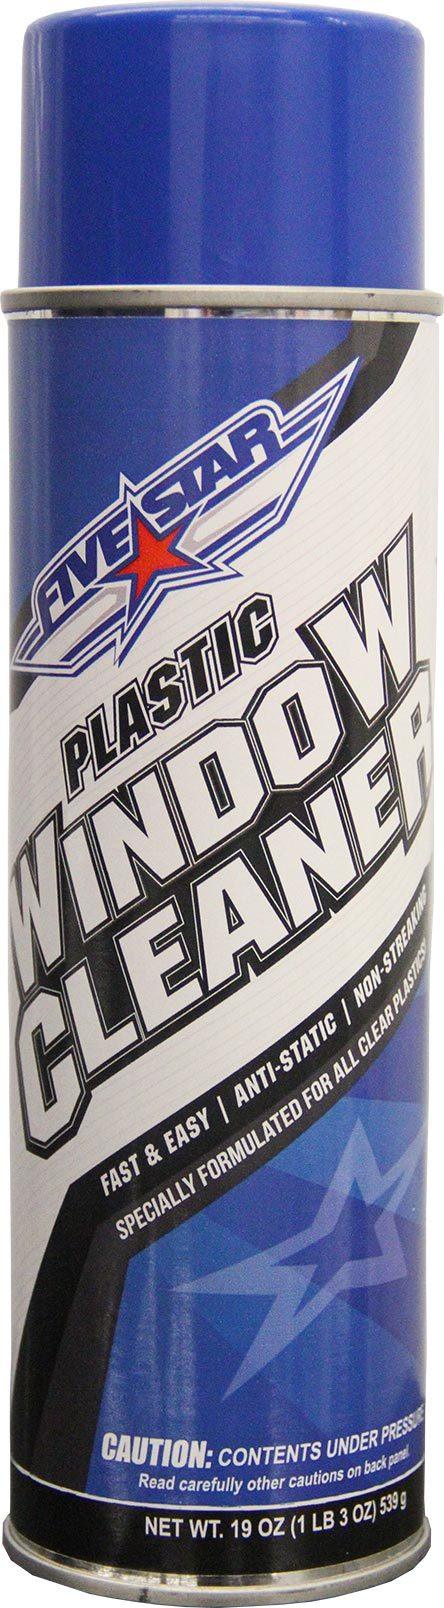 Window Cleaner Aersol Foam 19oz Single - Burlile Performance Products